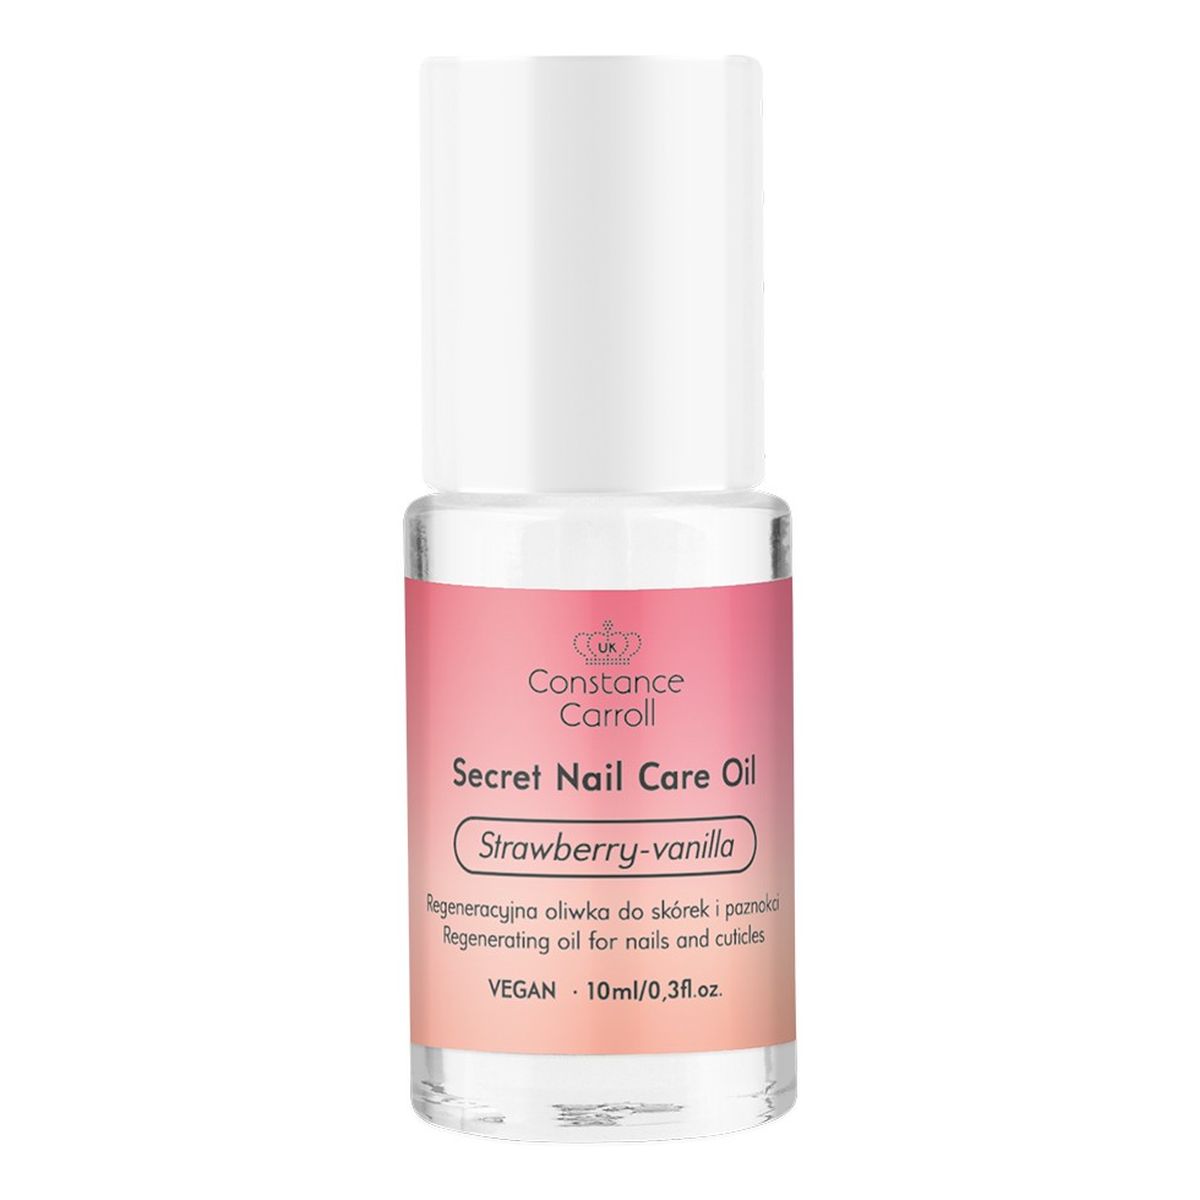 Constance Carroll Secret Nail Care Oil Regeneracyjna Oliwka do skórek i paznokci - Strawberry&Vanilla 10ml